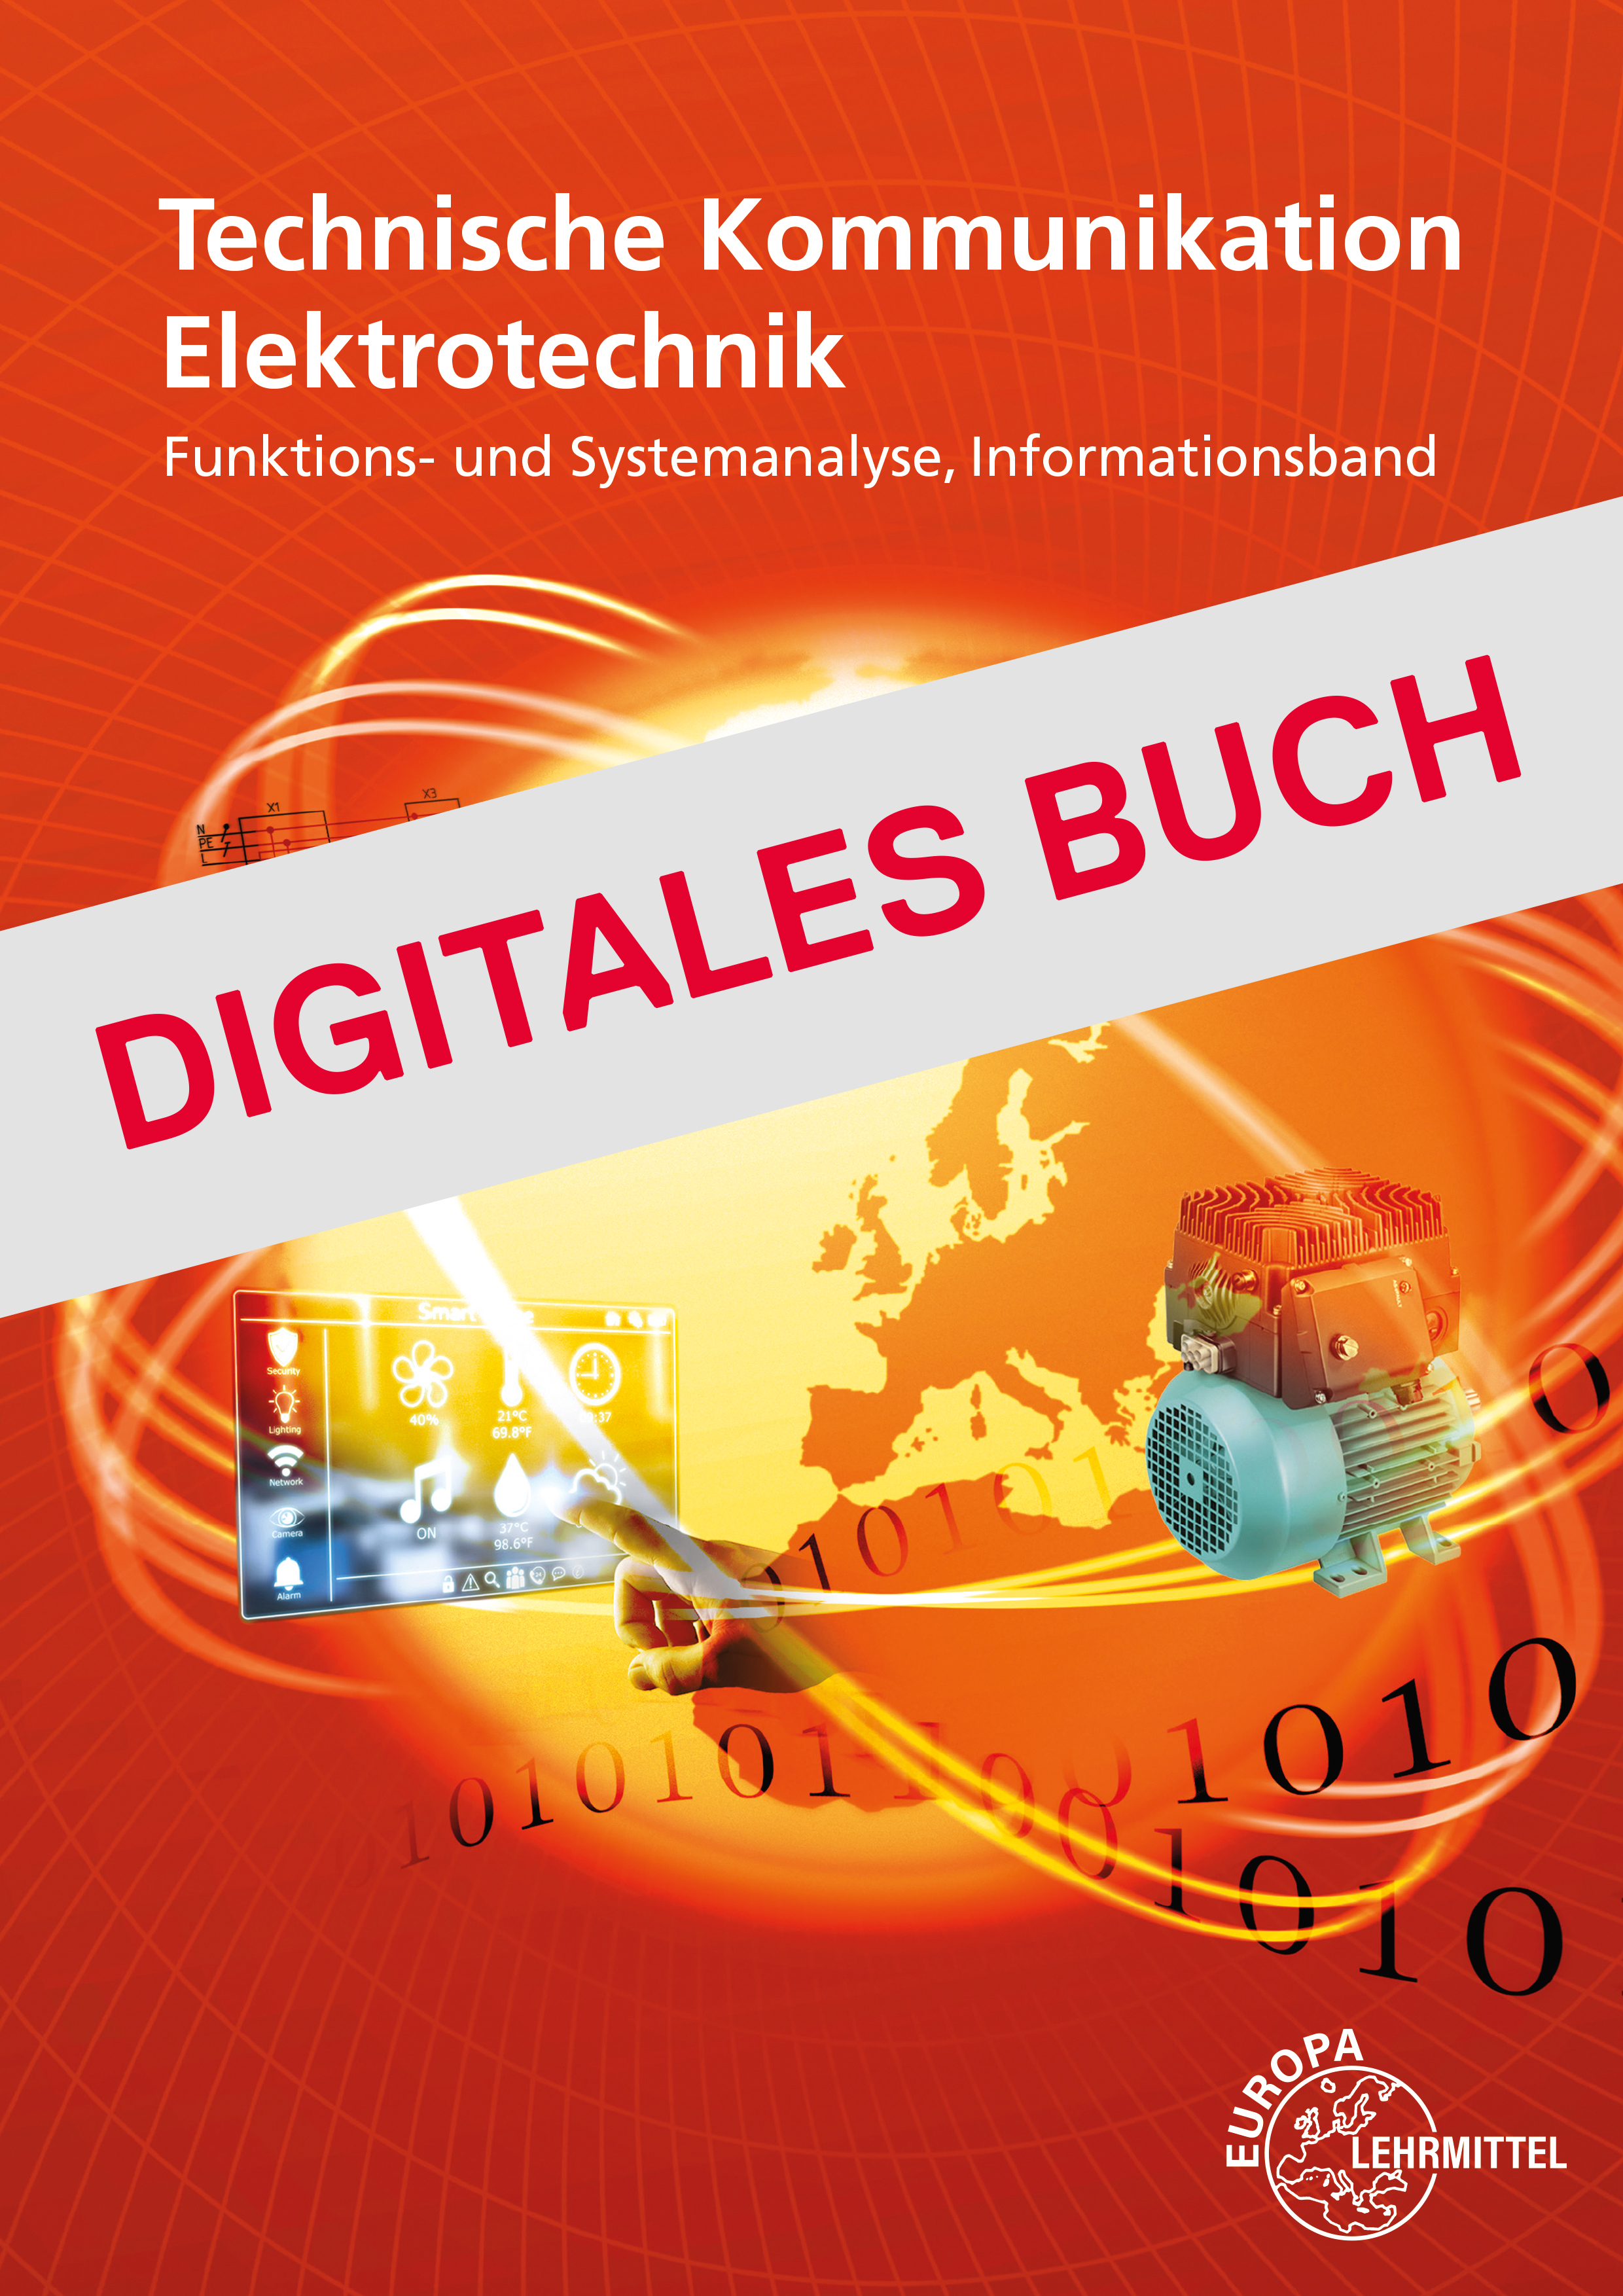 Technische Kommunikation Elektrotechnik Informationsband - Digitales Buch